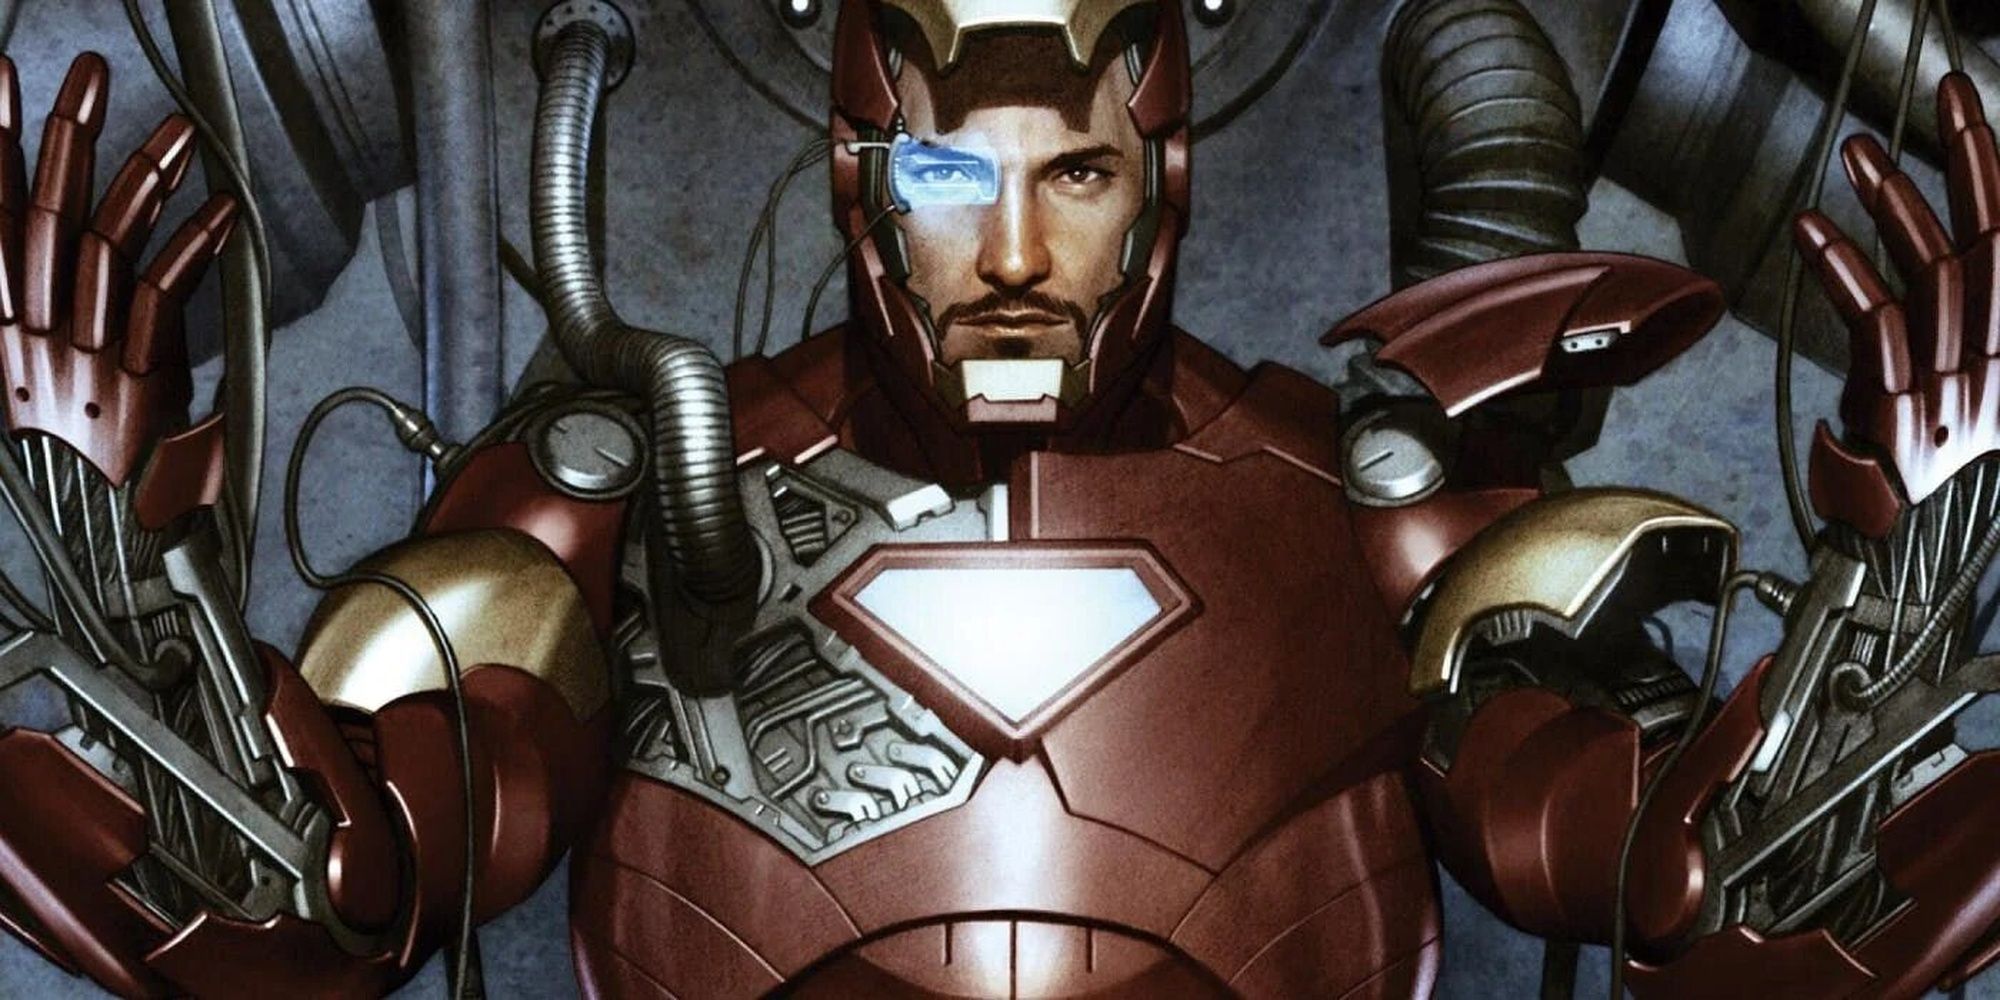 Tony Stark/Iron Man in the comics